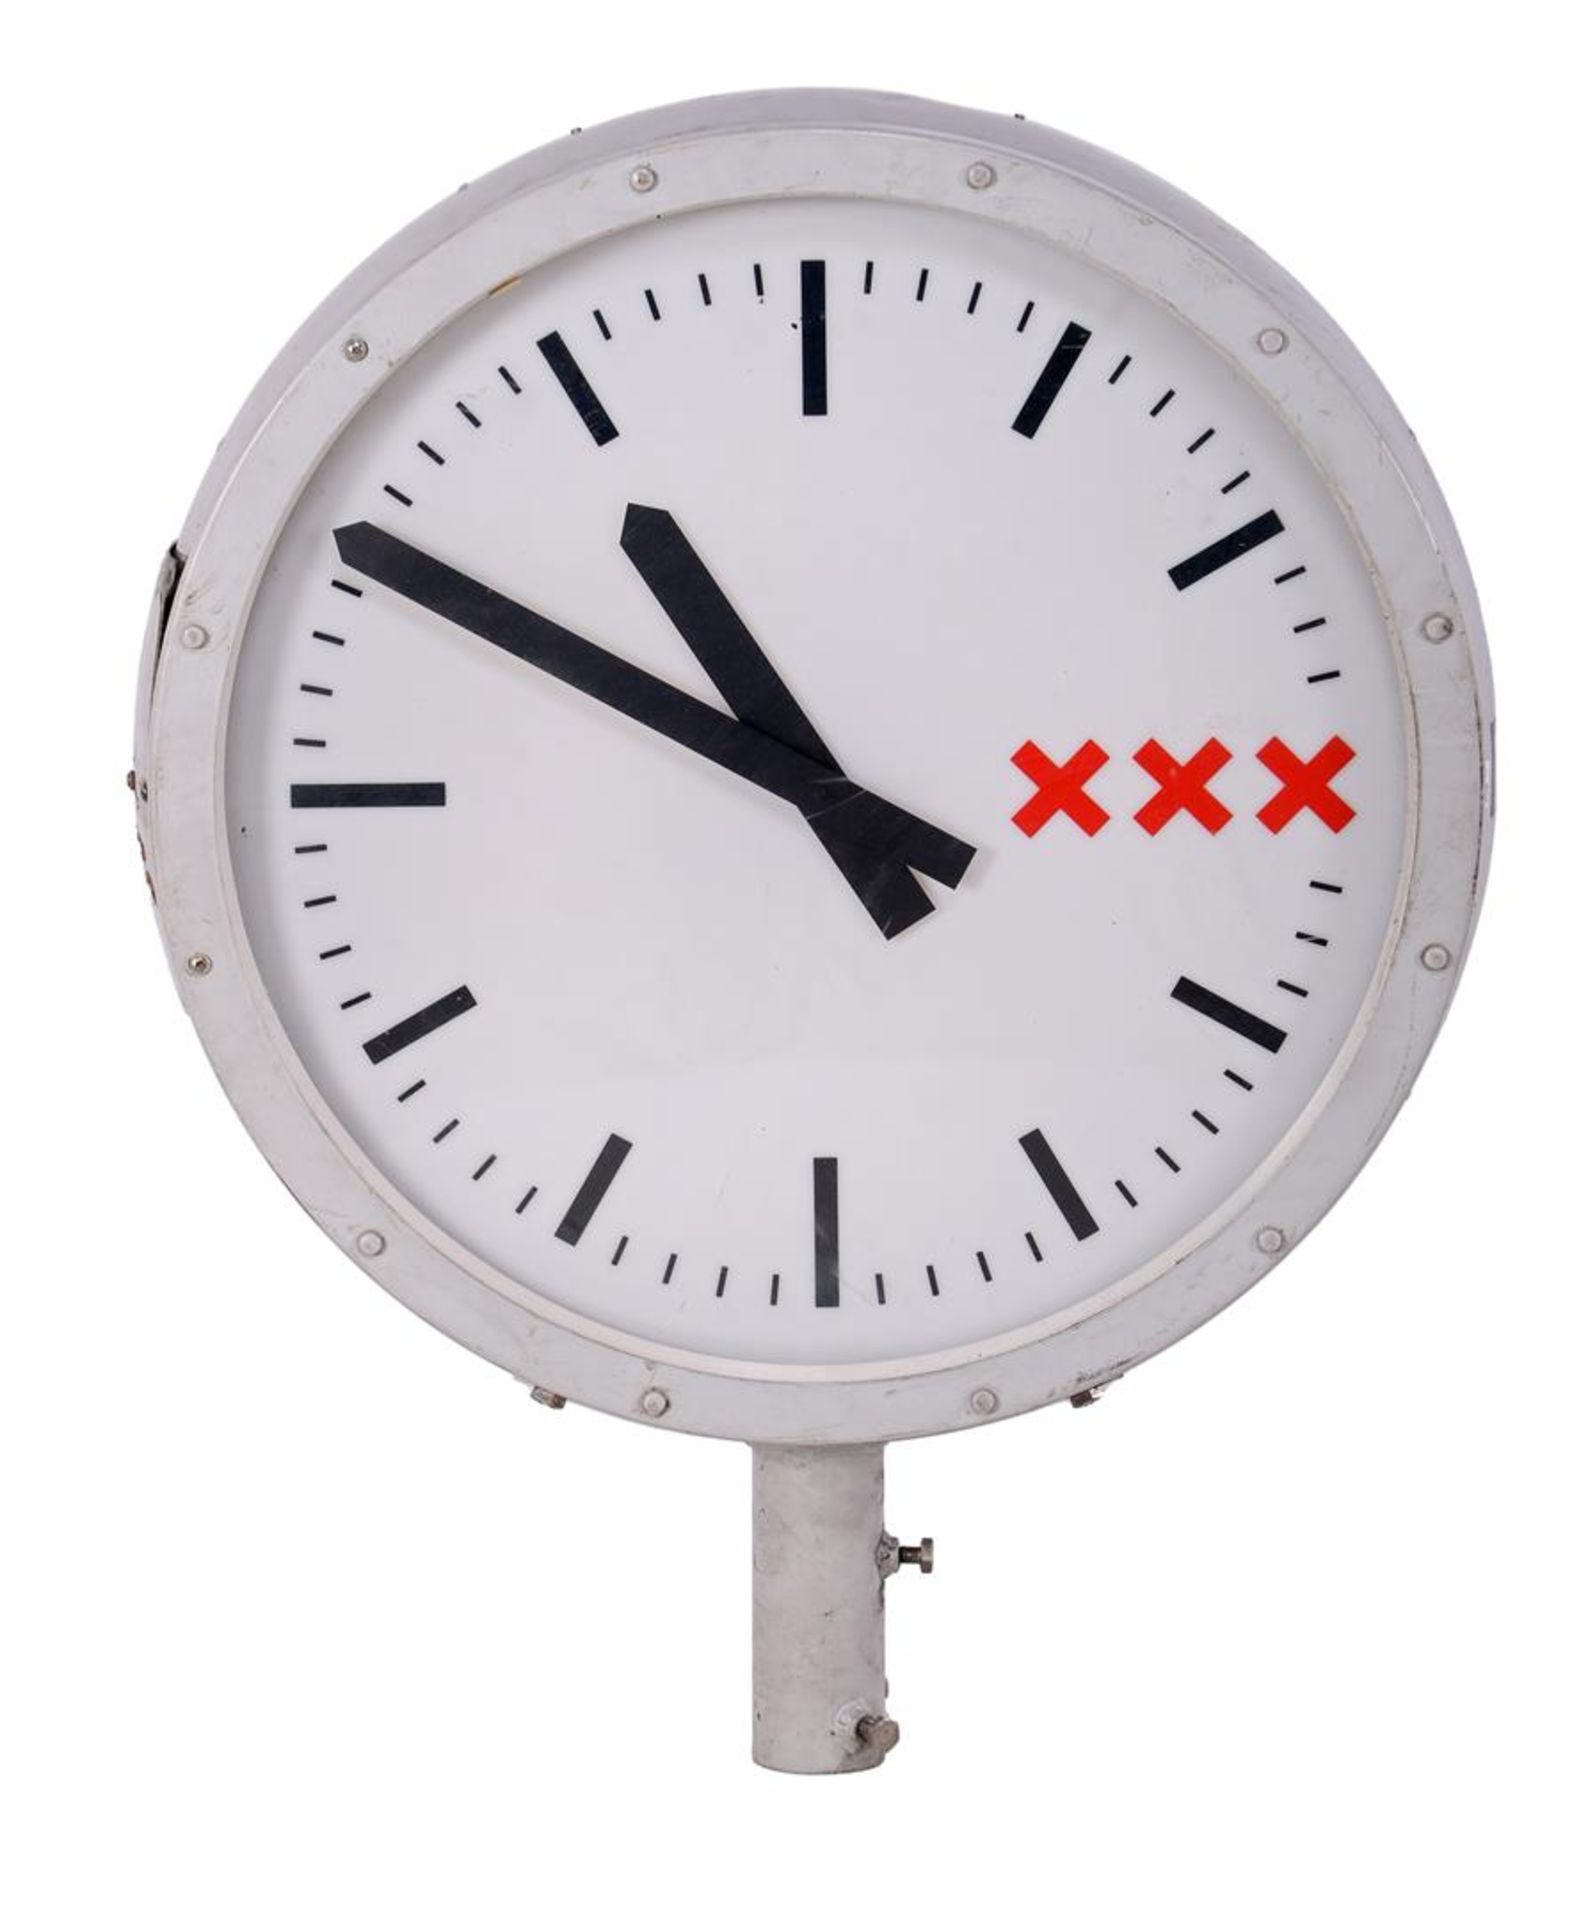 Metal mechanical industrial station clock - Image 2 of 2